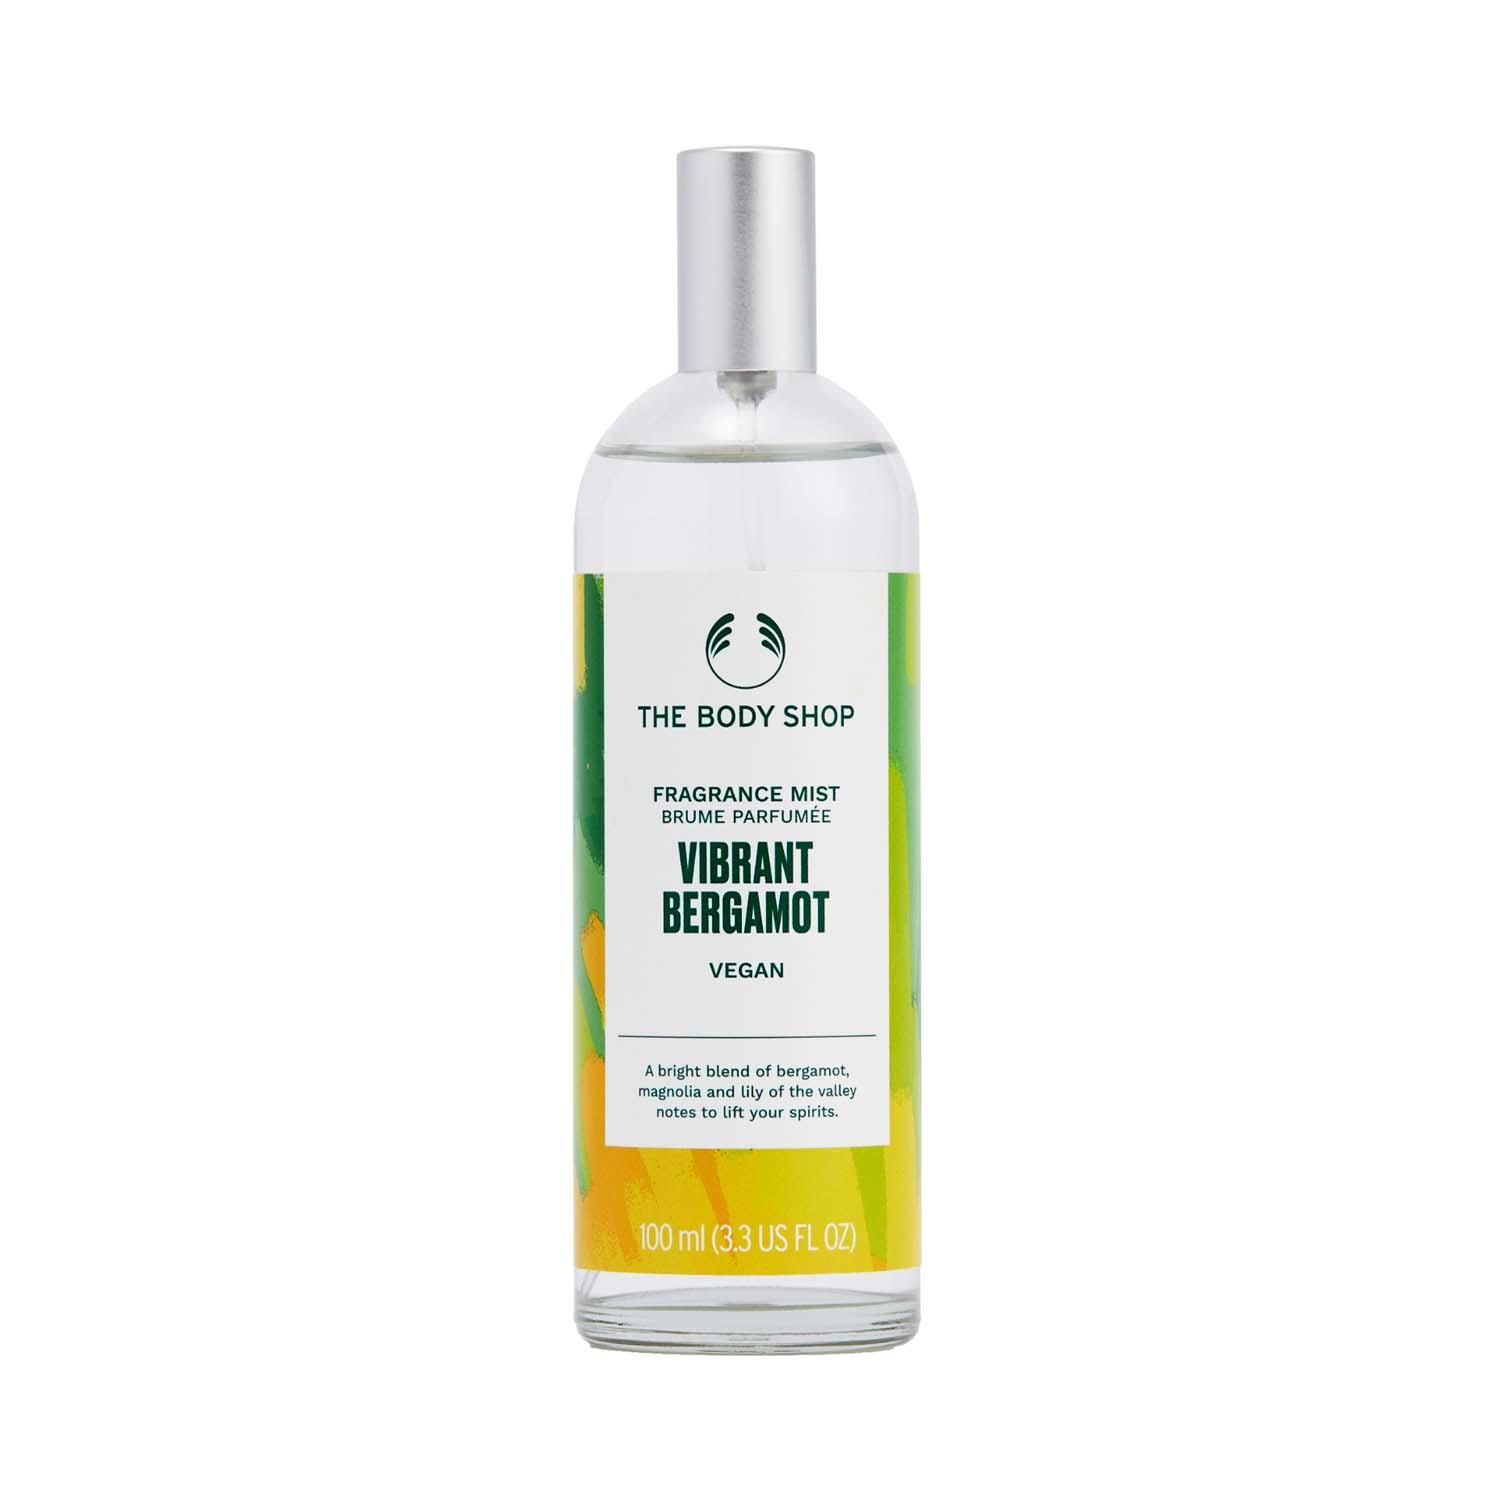 The Body Shop | The Body Shop Vibrant Bergamot Fragrance Mist (100ml)